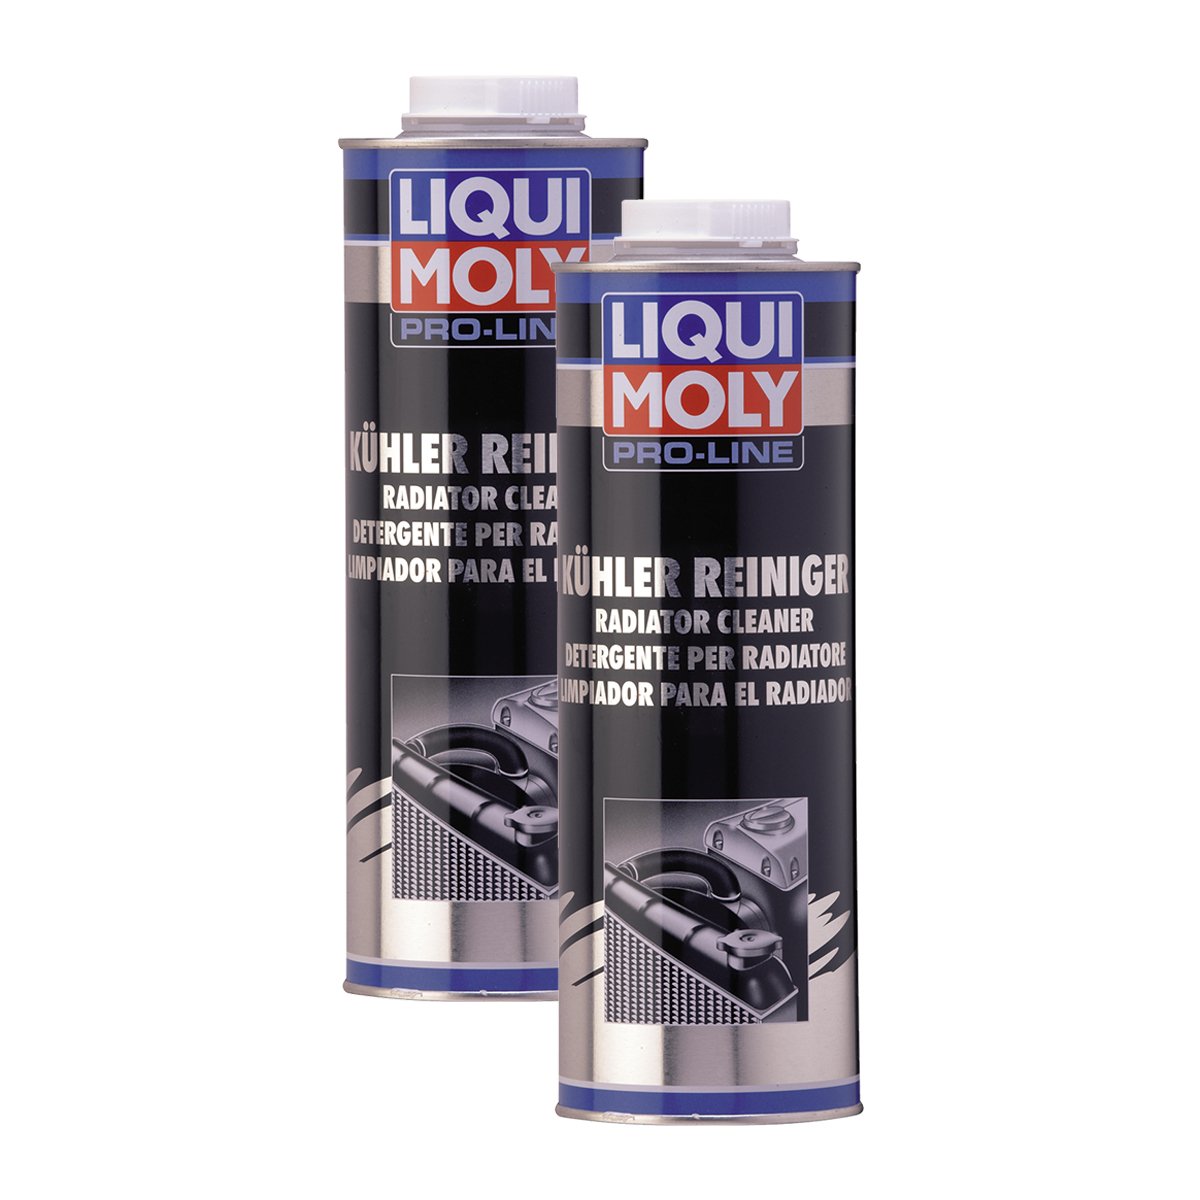 2x LIQUI MOLY 5189 Pro-Line Kühler-Reiniger Kühlsystem Additiv 1L von Liqui Moly